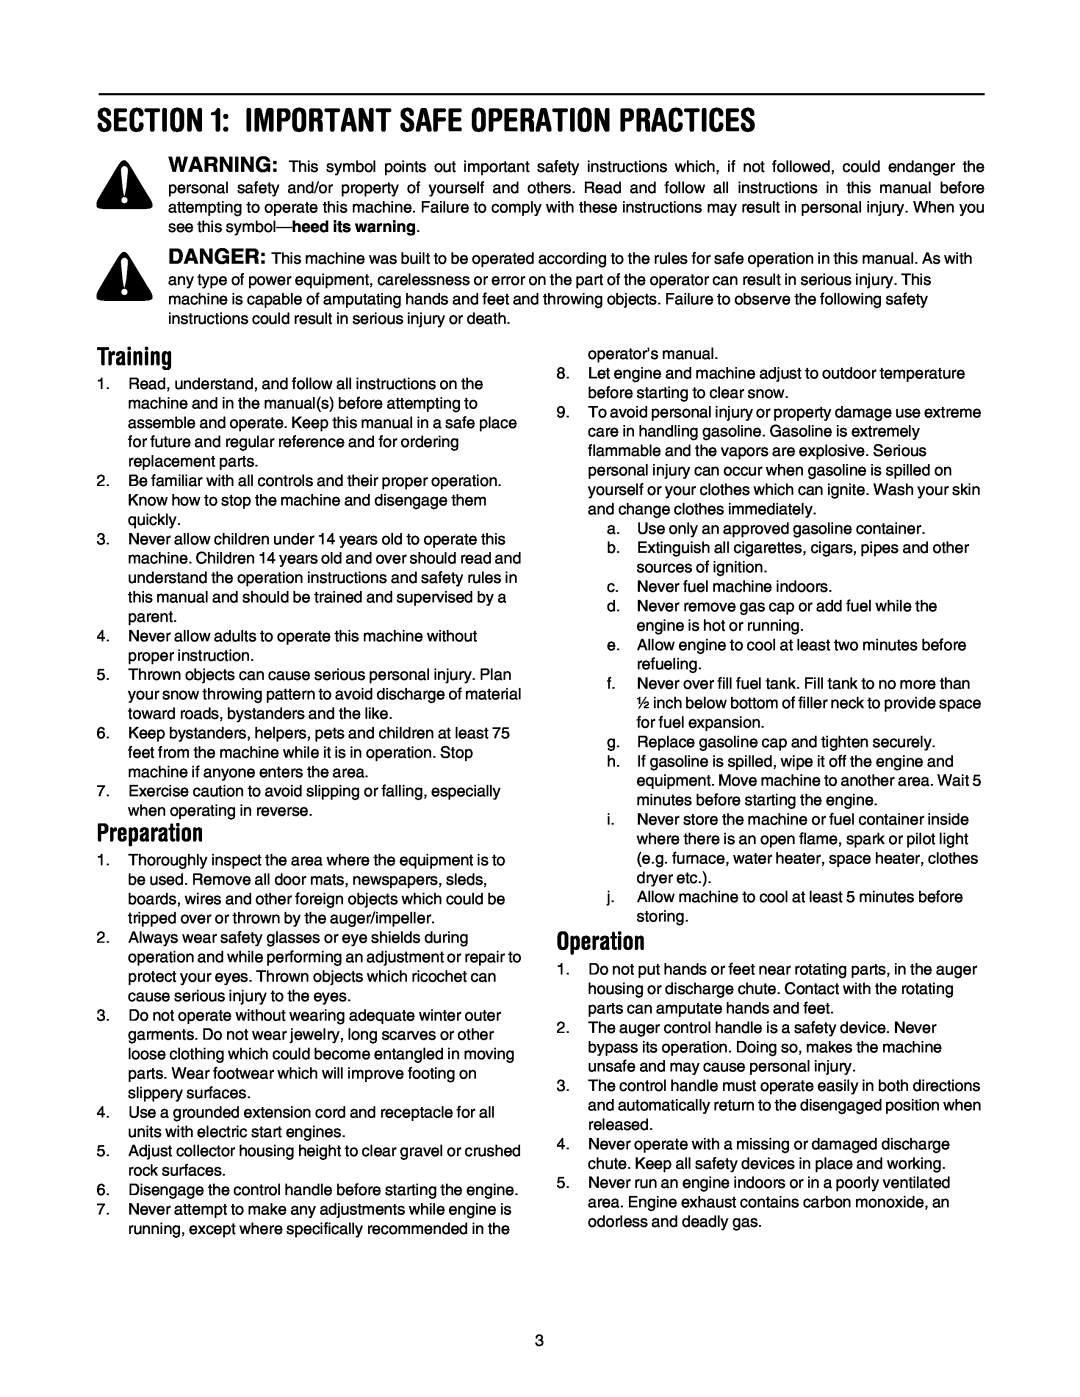 MTD OGST-3106 manual Important Safe Operation Practices, Training, Preparation 